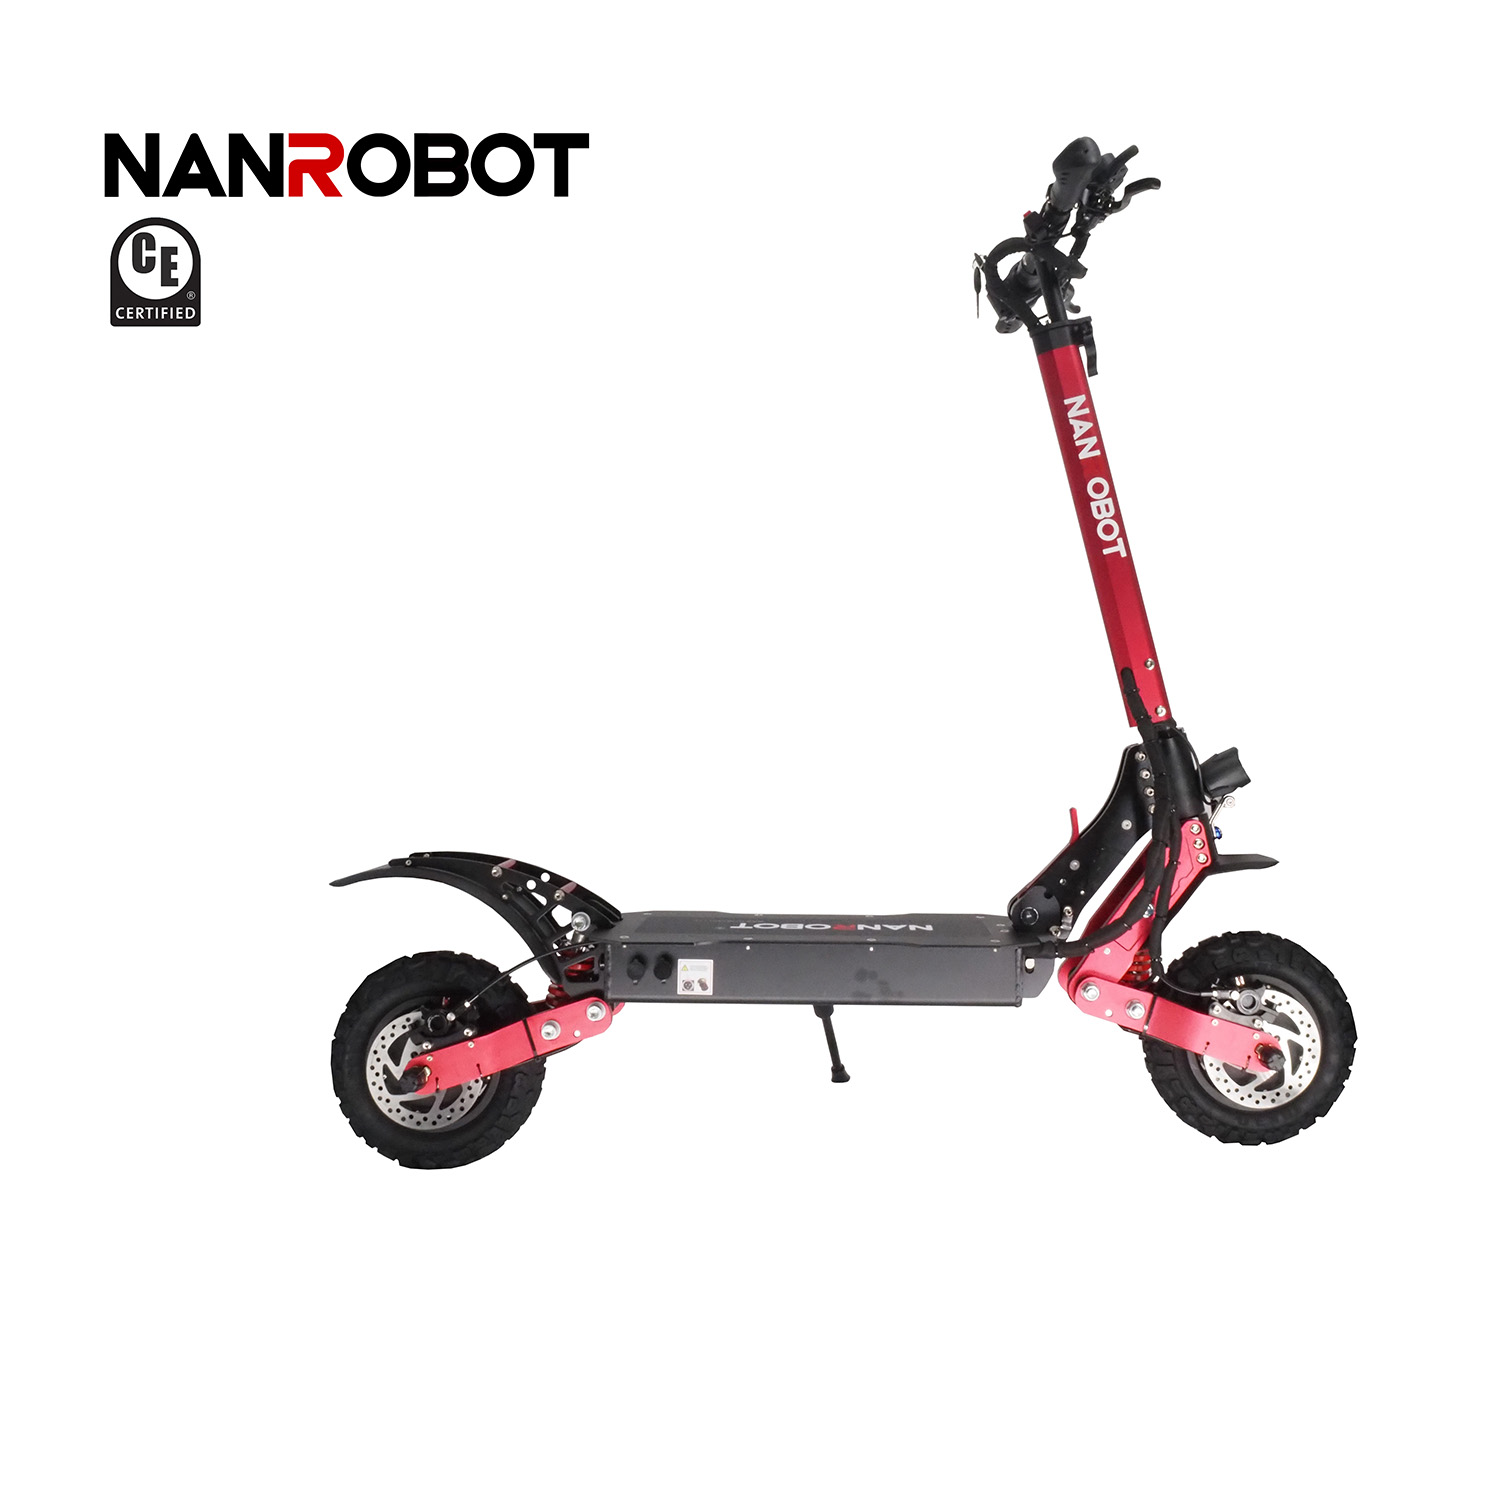 Nanrobot D4+ 3.0 electric scooter